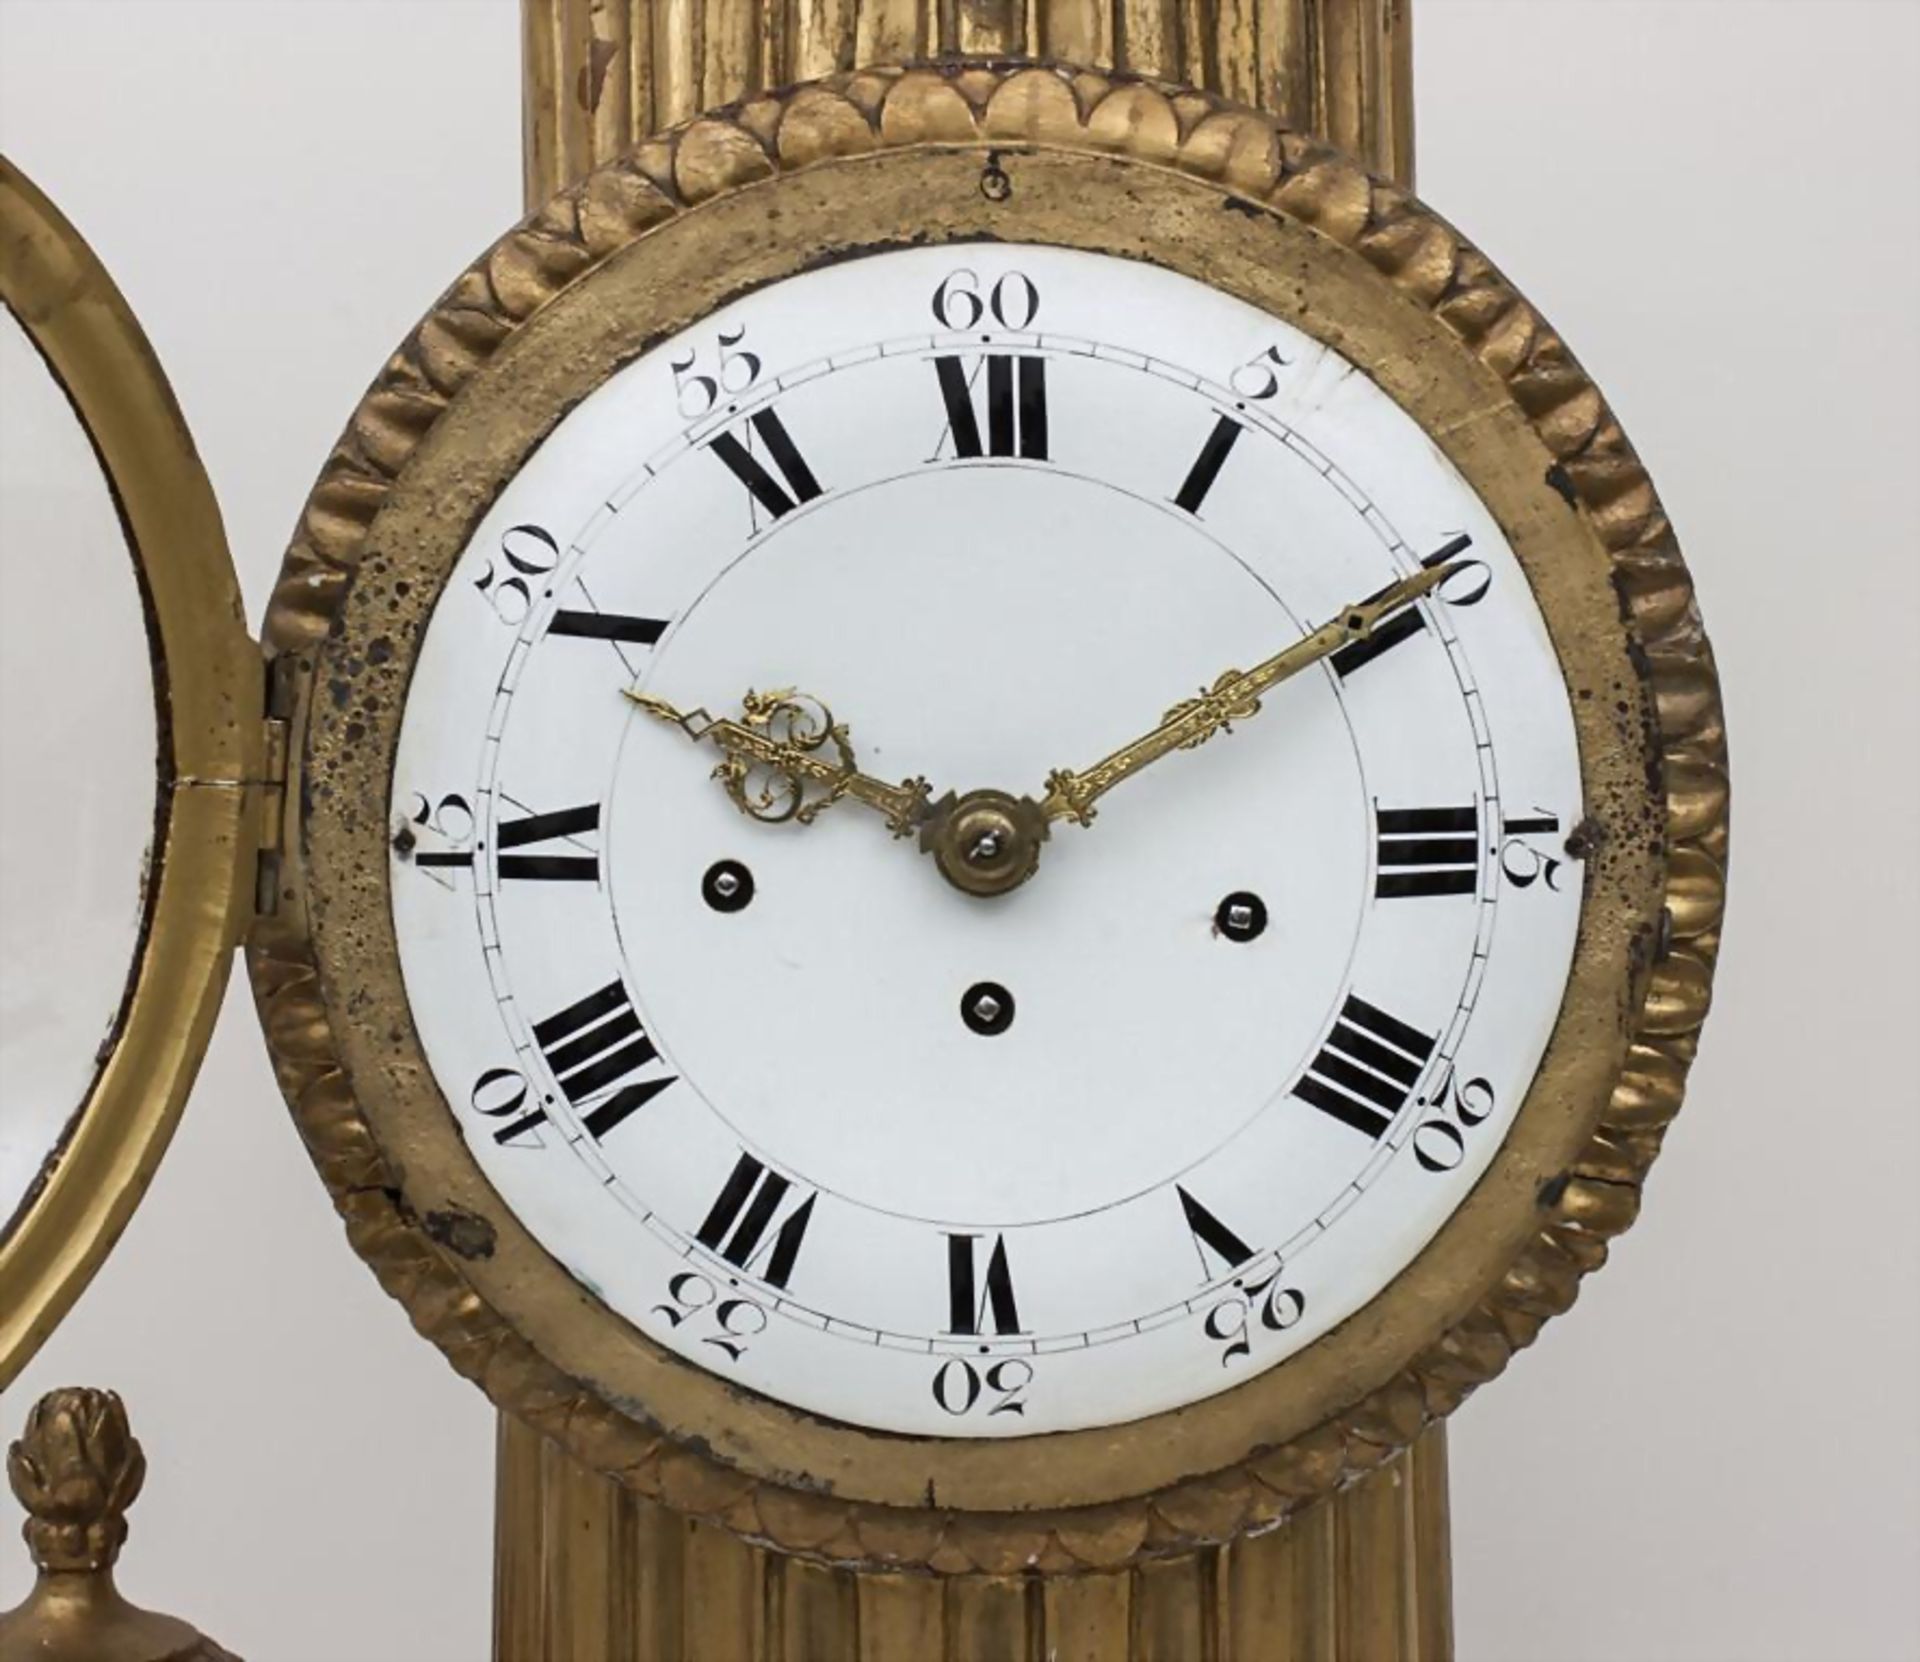 Louis-Seize-Kaminuhr/Louis-Seize Mantle Clock, Wien, um 1780 - Image 2 of 4